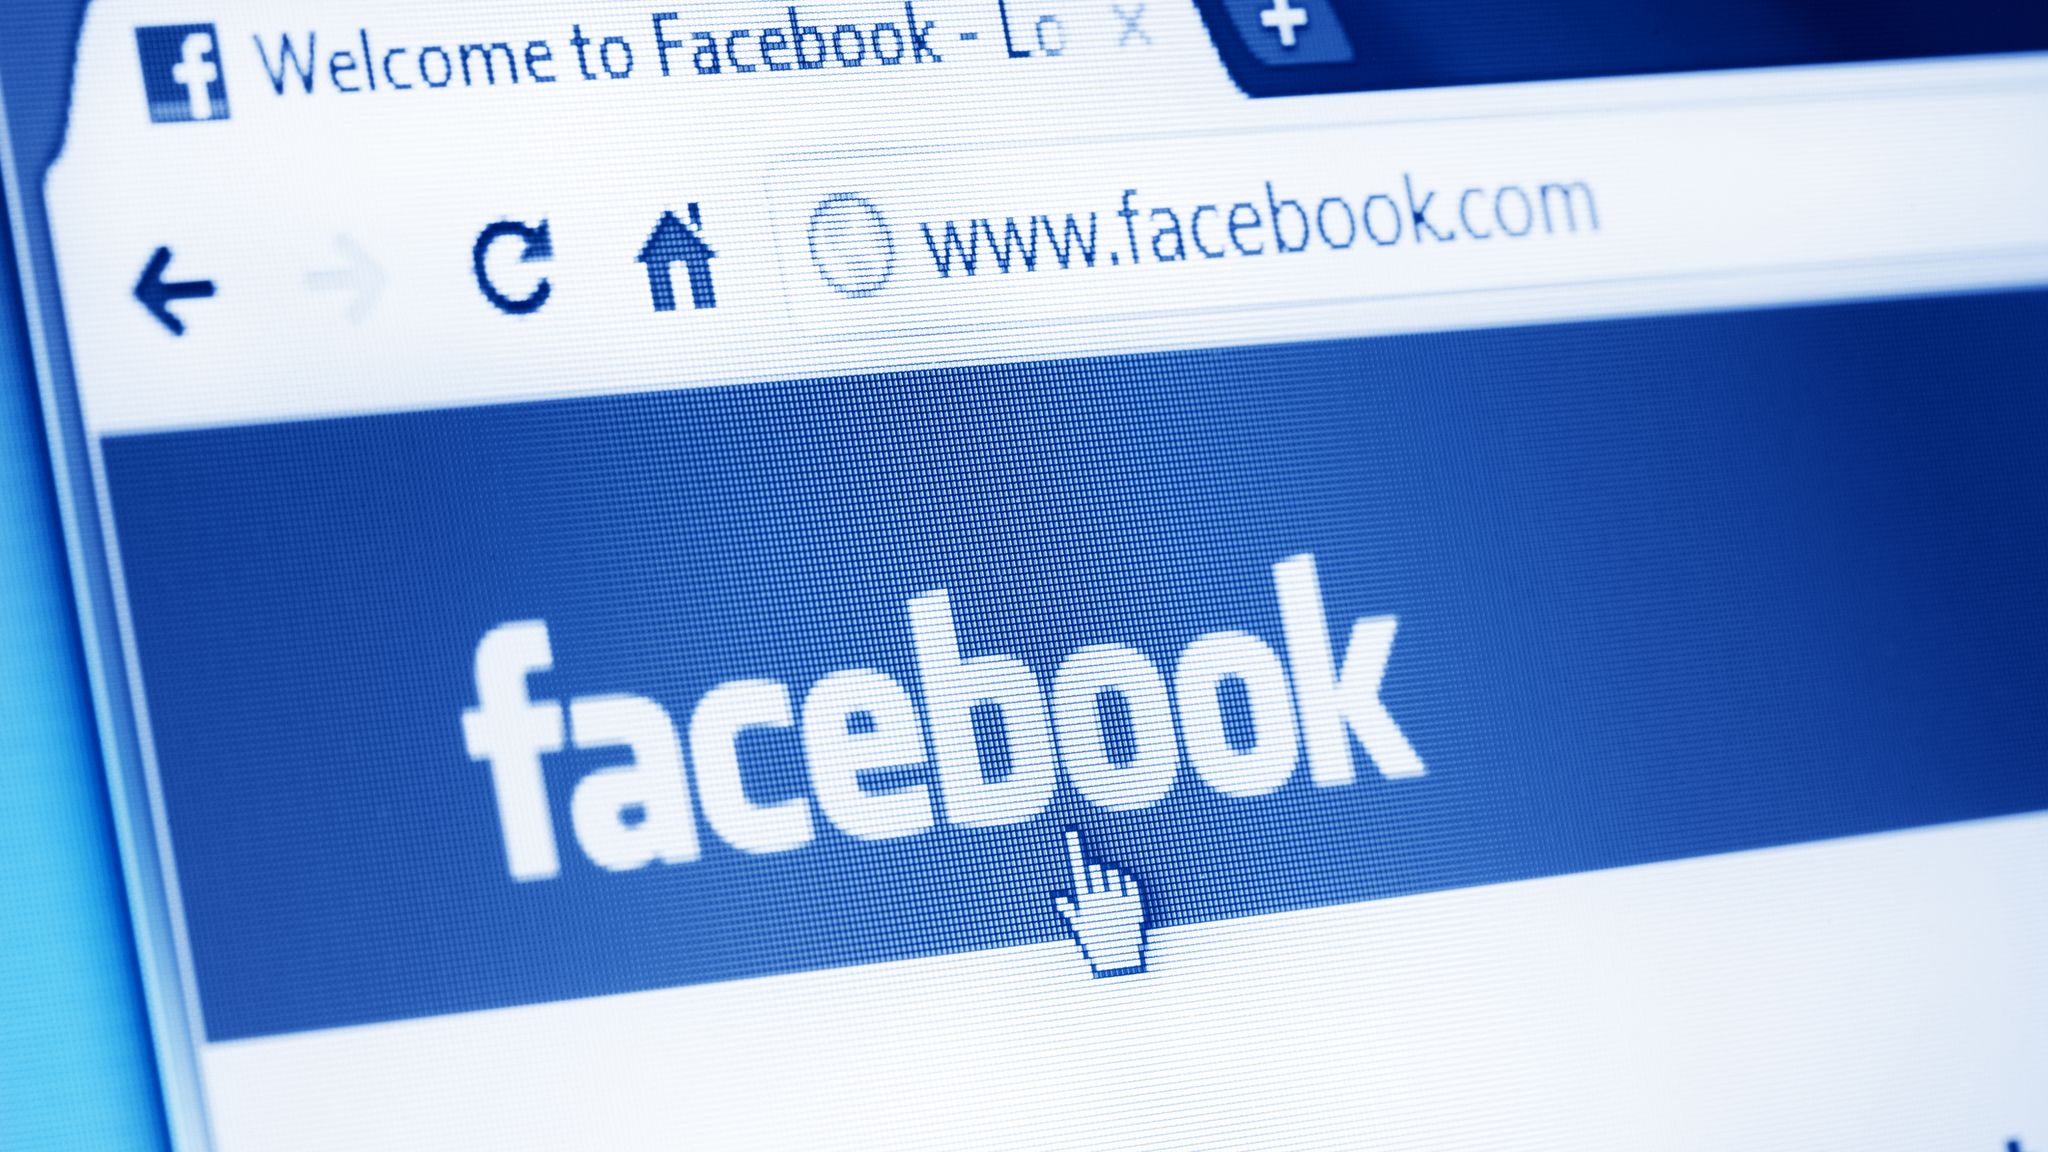 Martin Lewis settles lawsuit against Facebook over scam ads Business